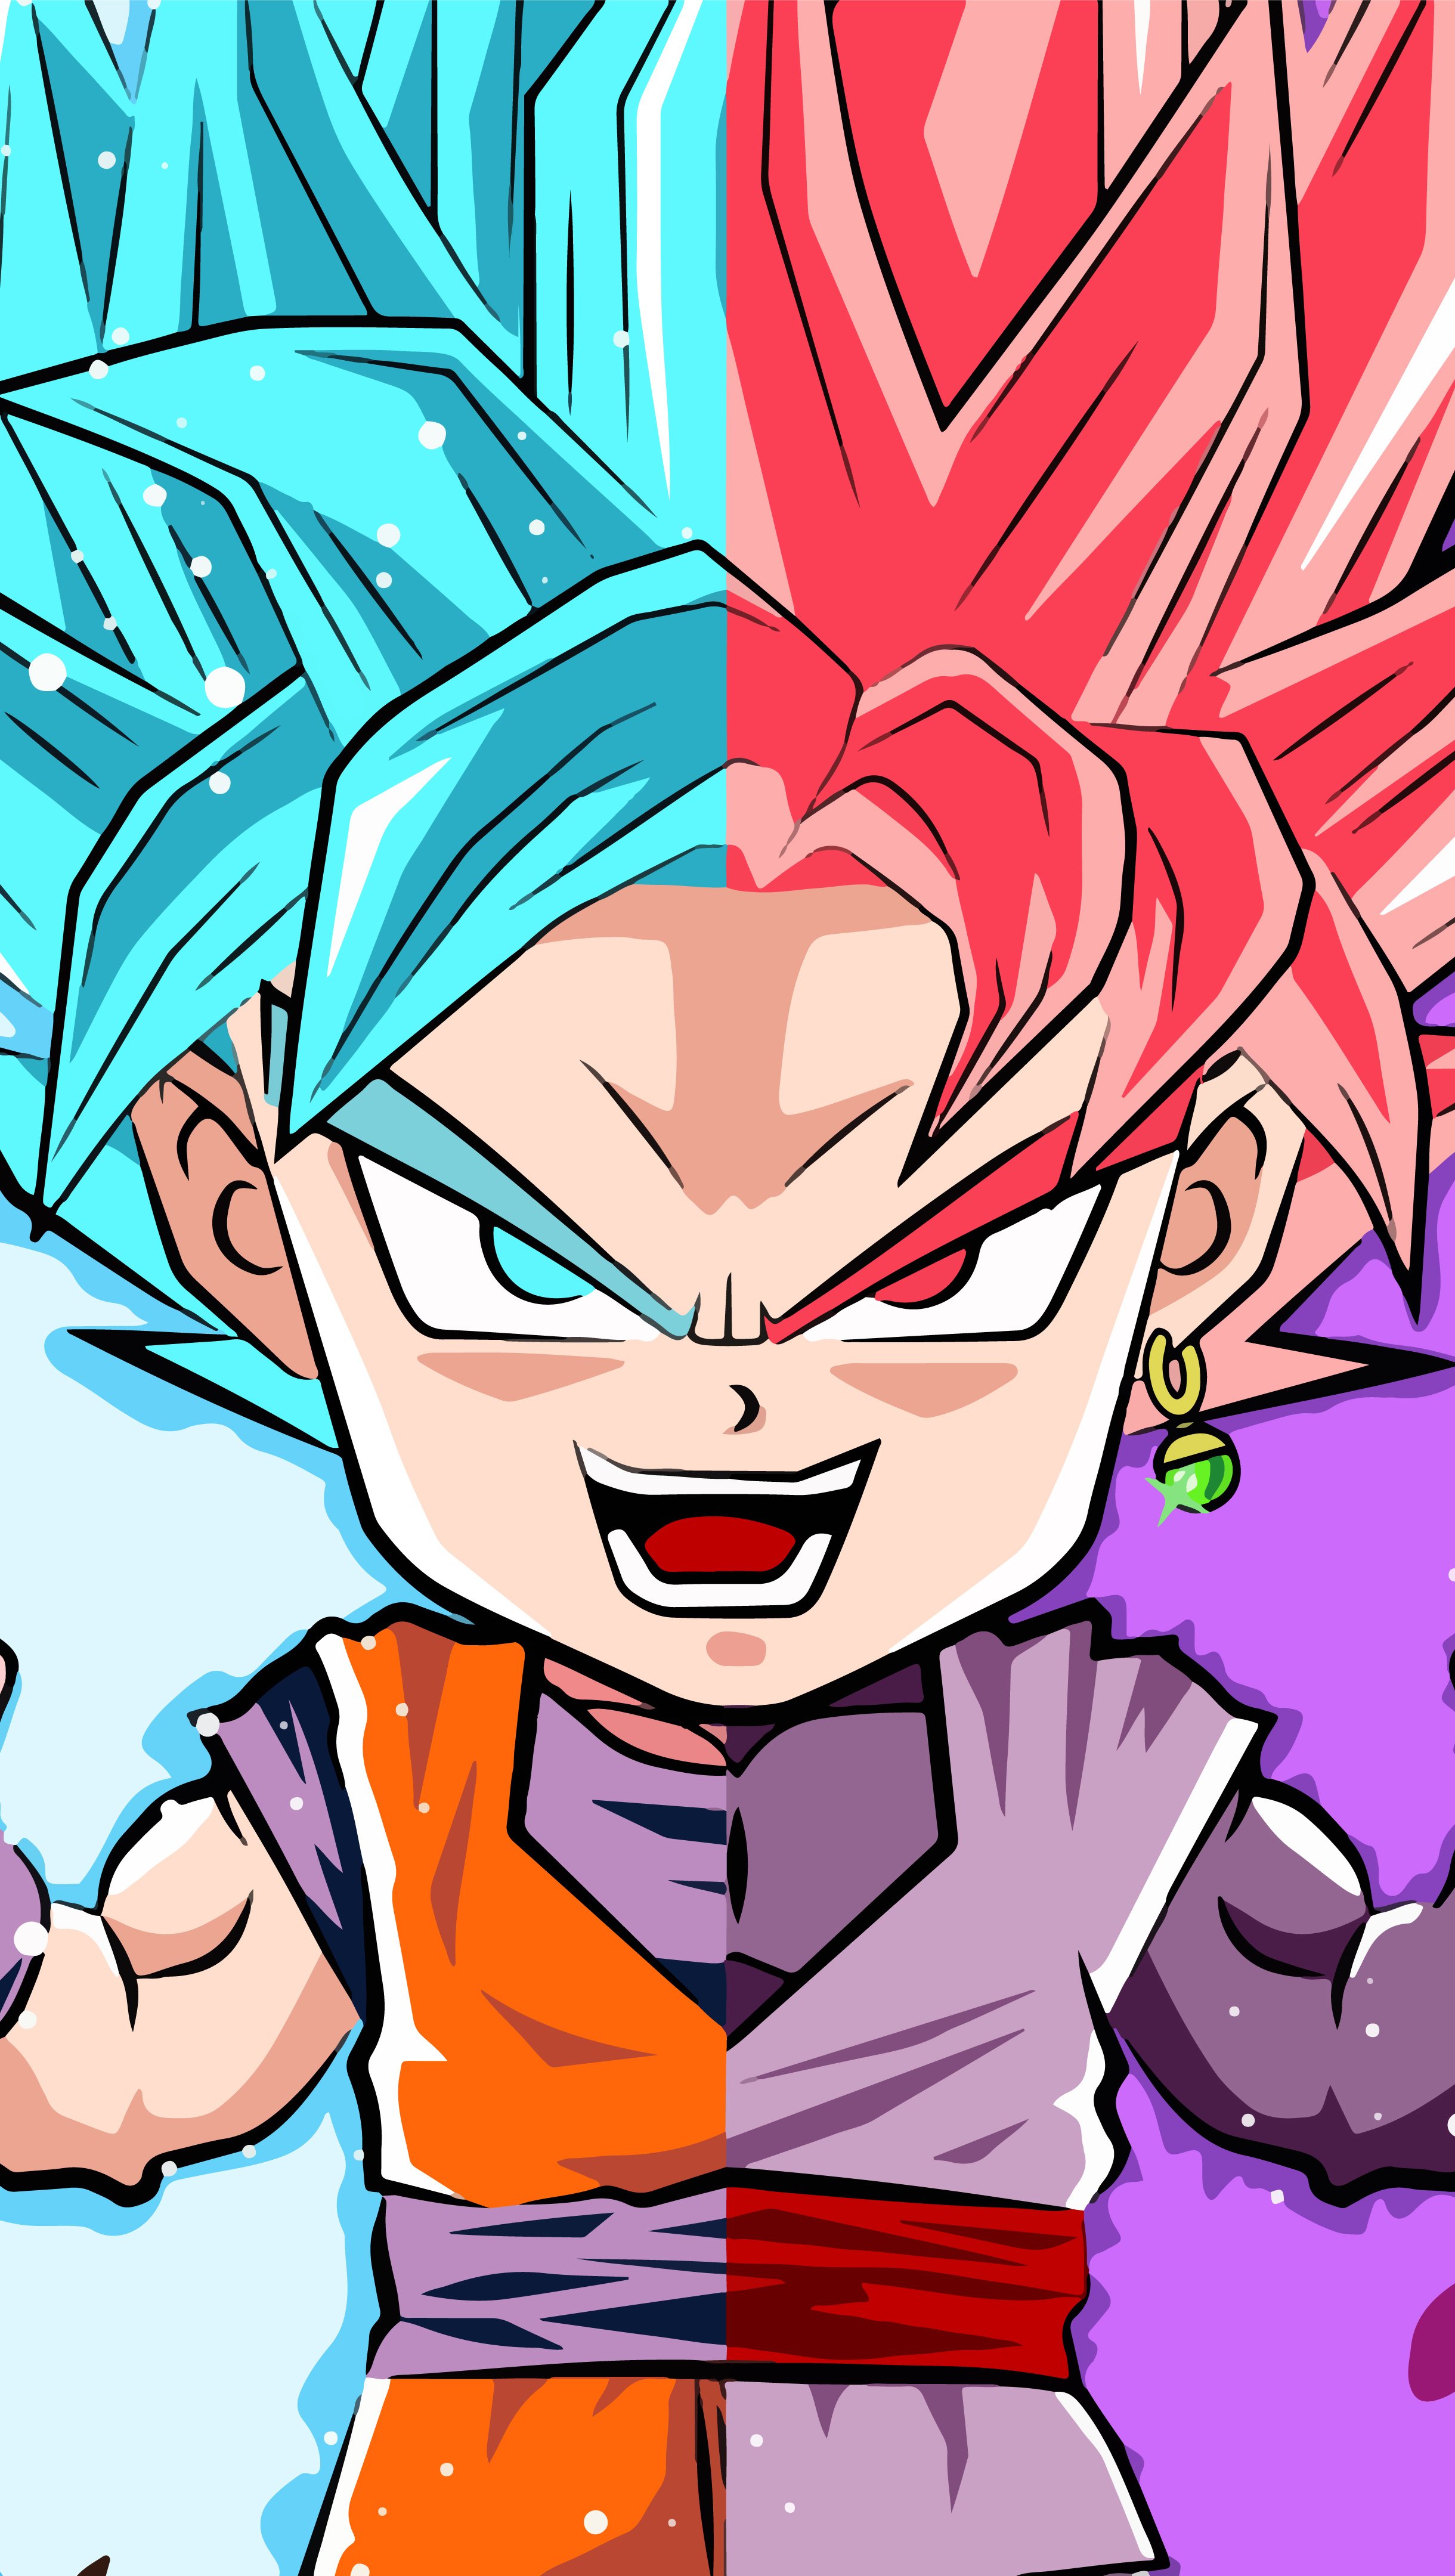 Art Dragon Ball Super Goku and Black Goku Anime Wallpaper 8k Ultra HD